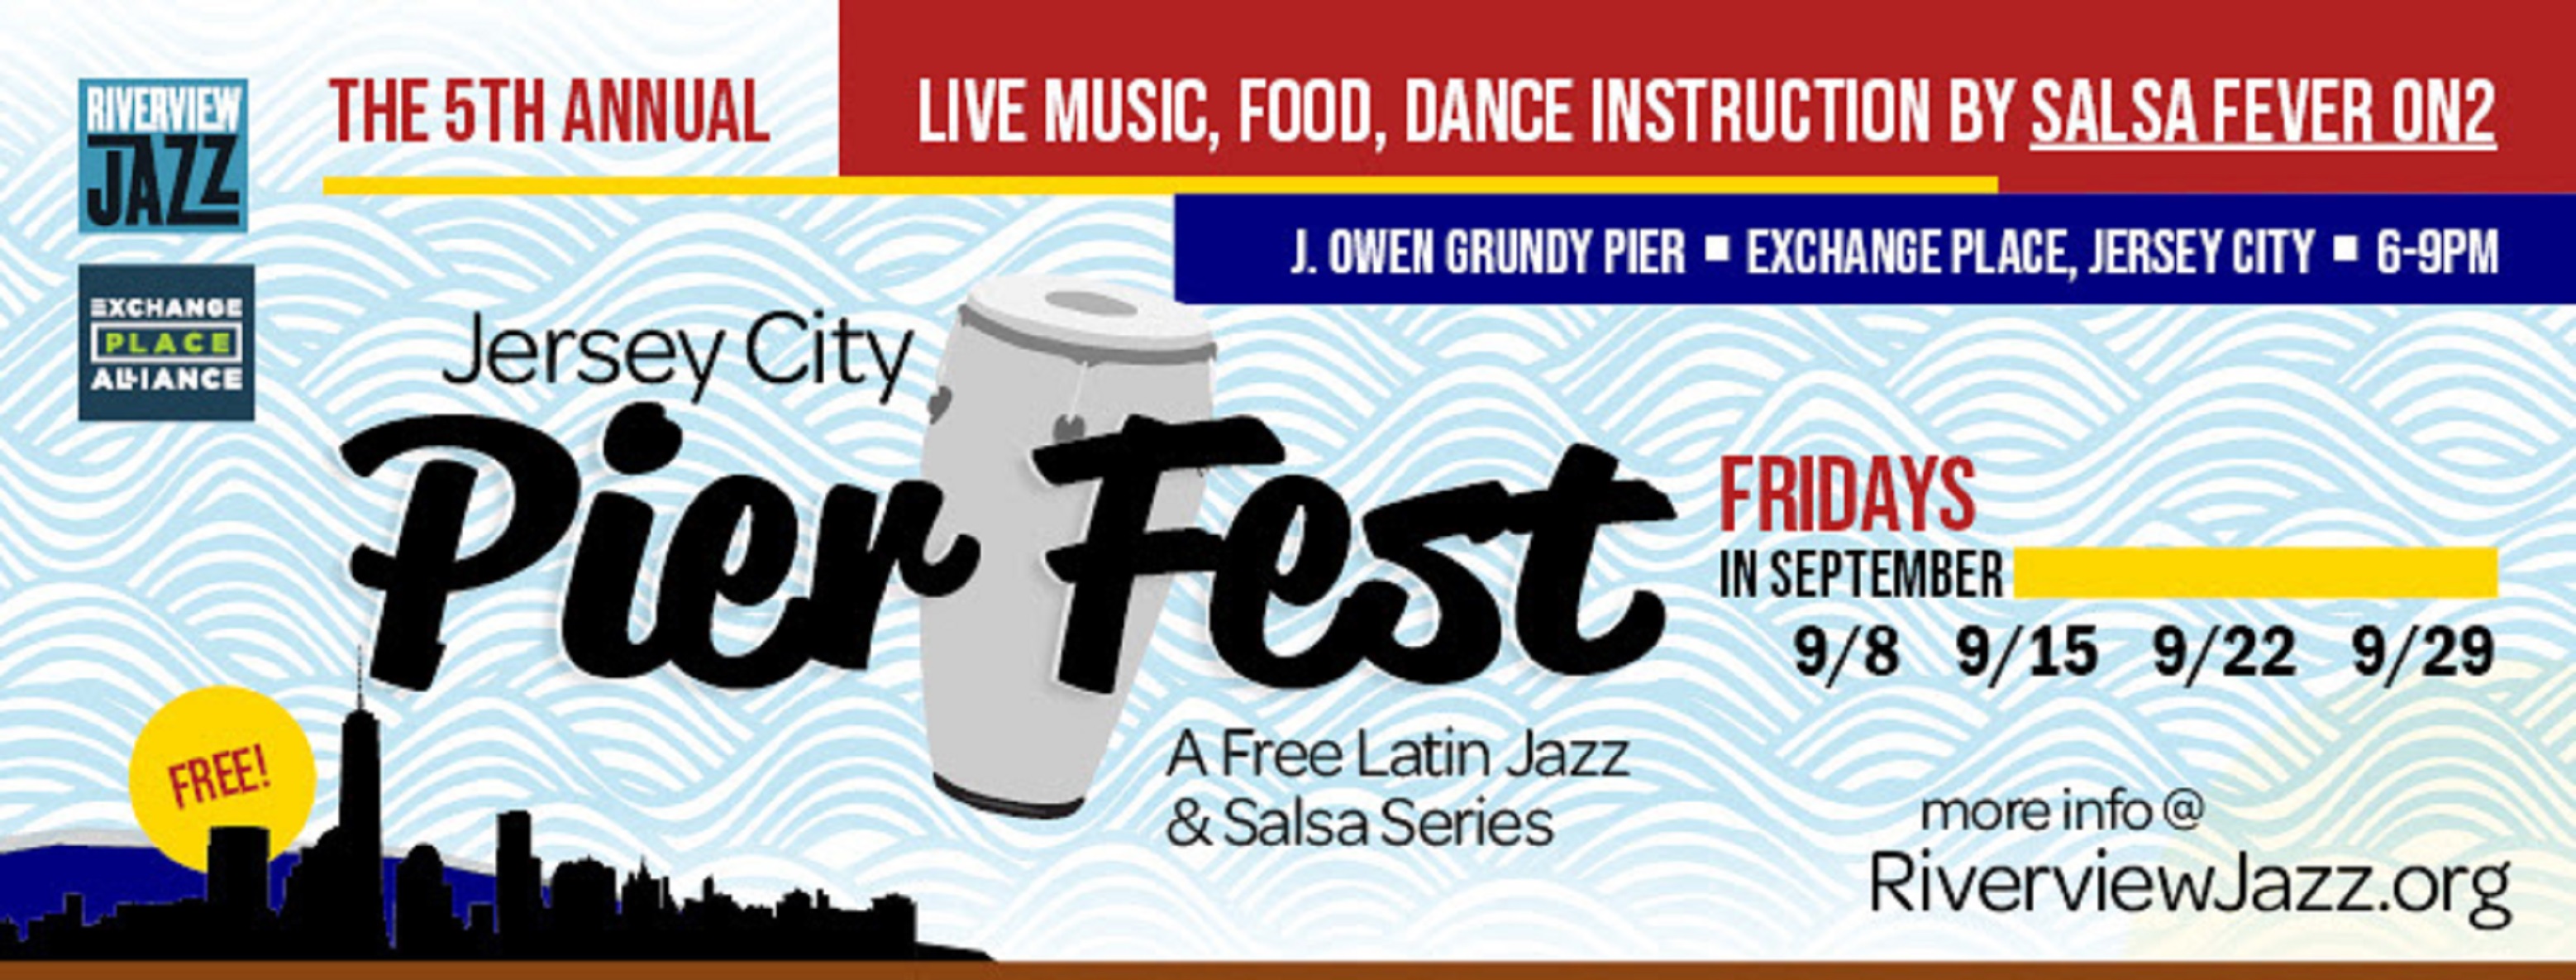 Pier Fest Returns to Jersey City with Latin Jazz & Salsa Series